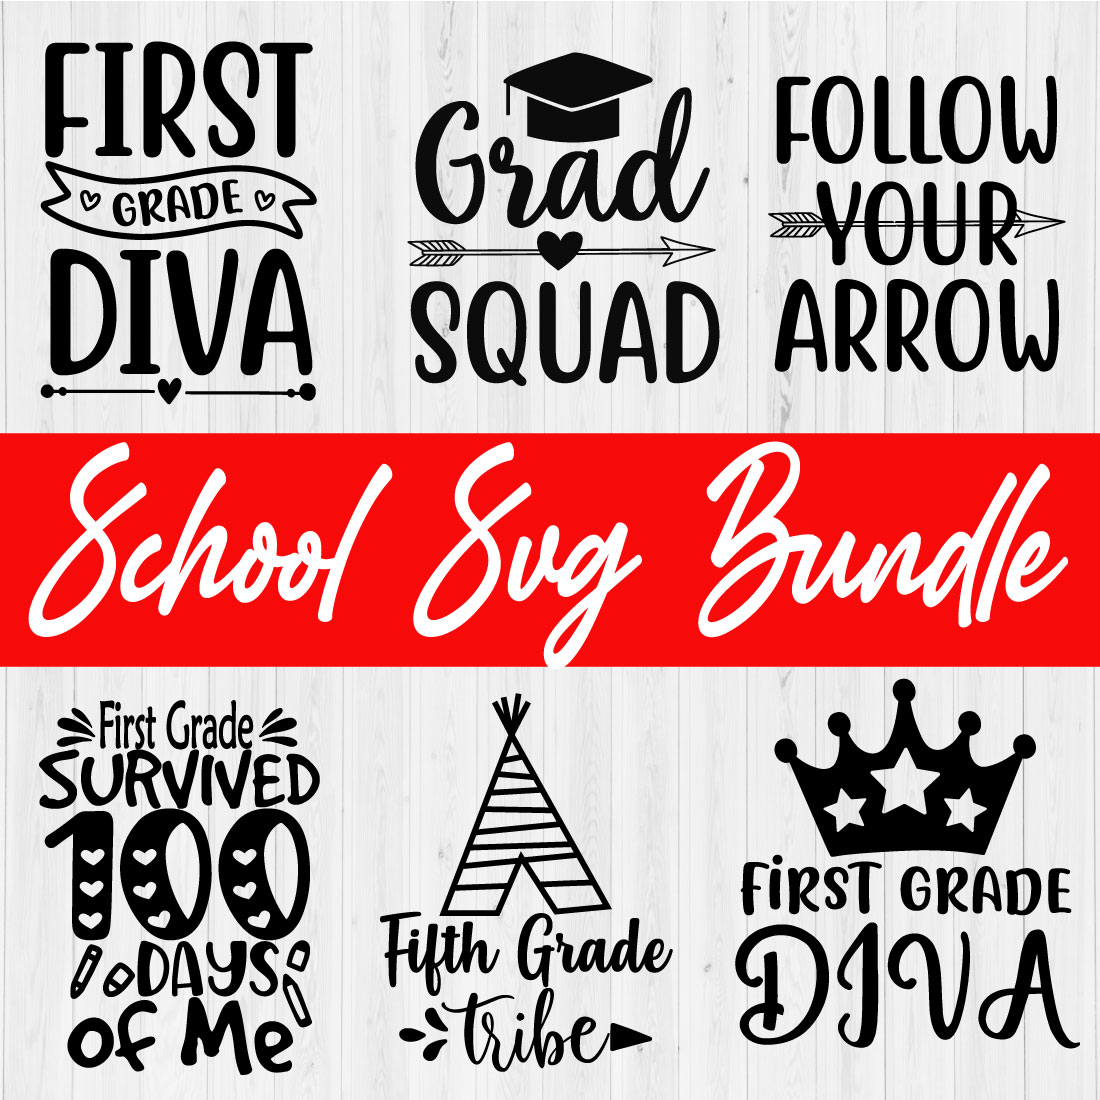 School Svg Design Bundle Vol4 cover image.